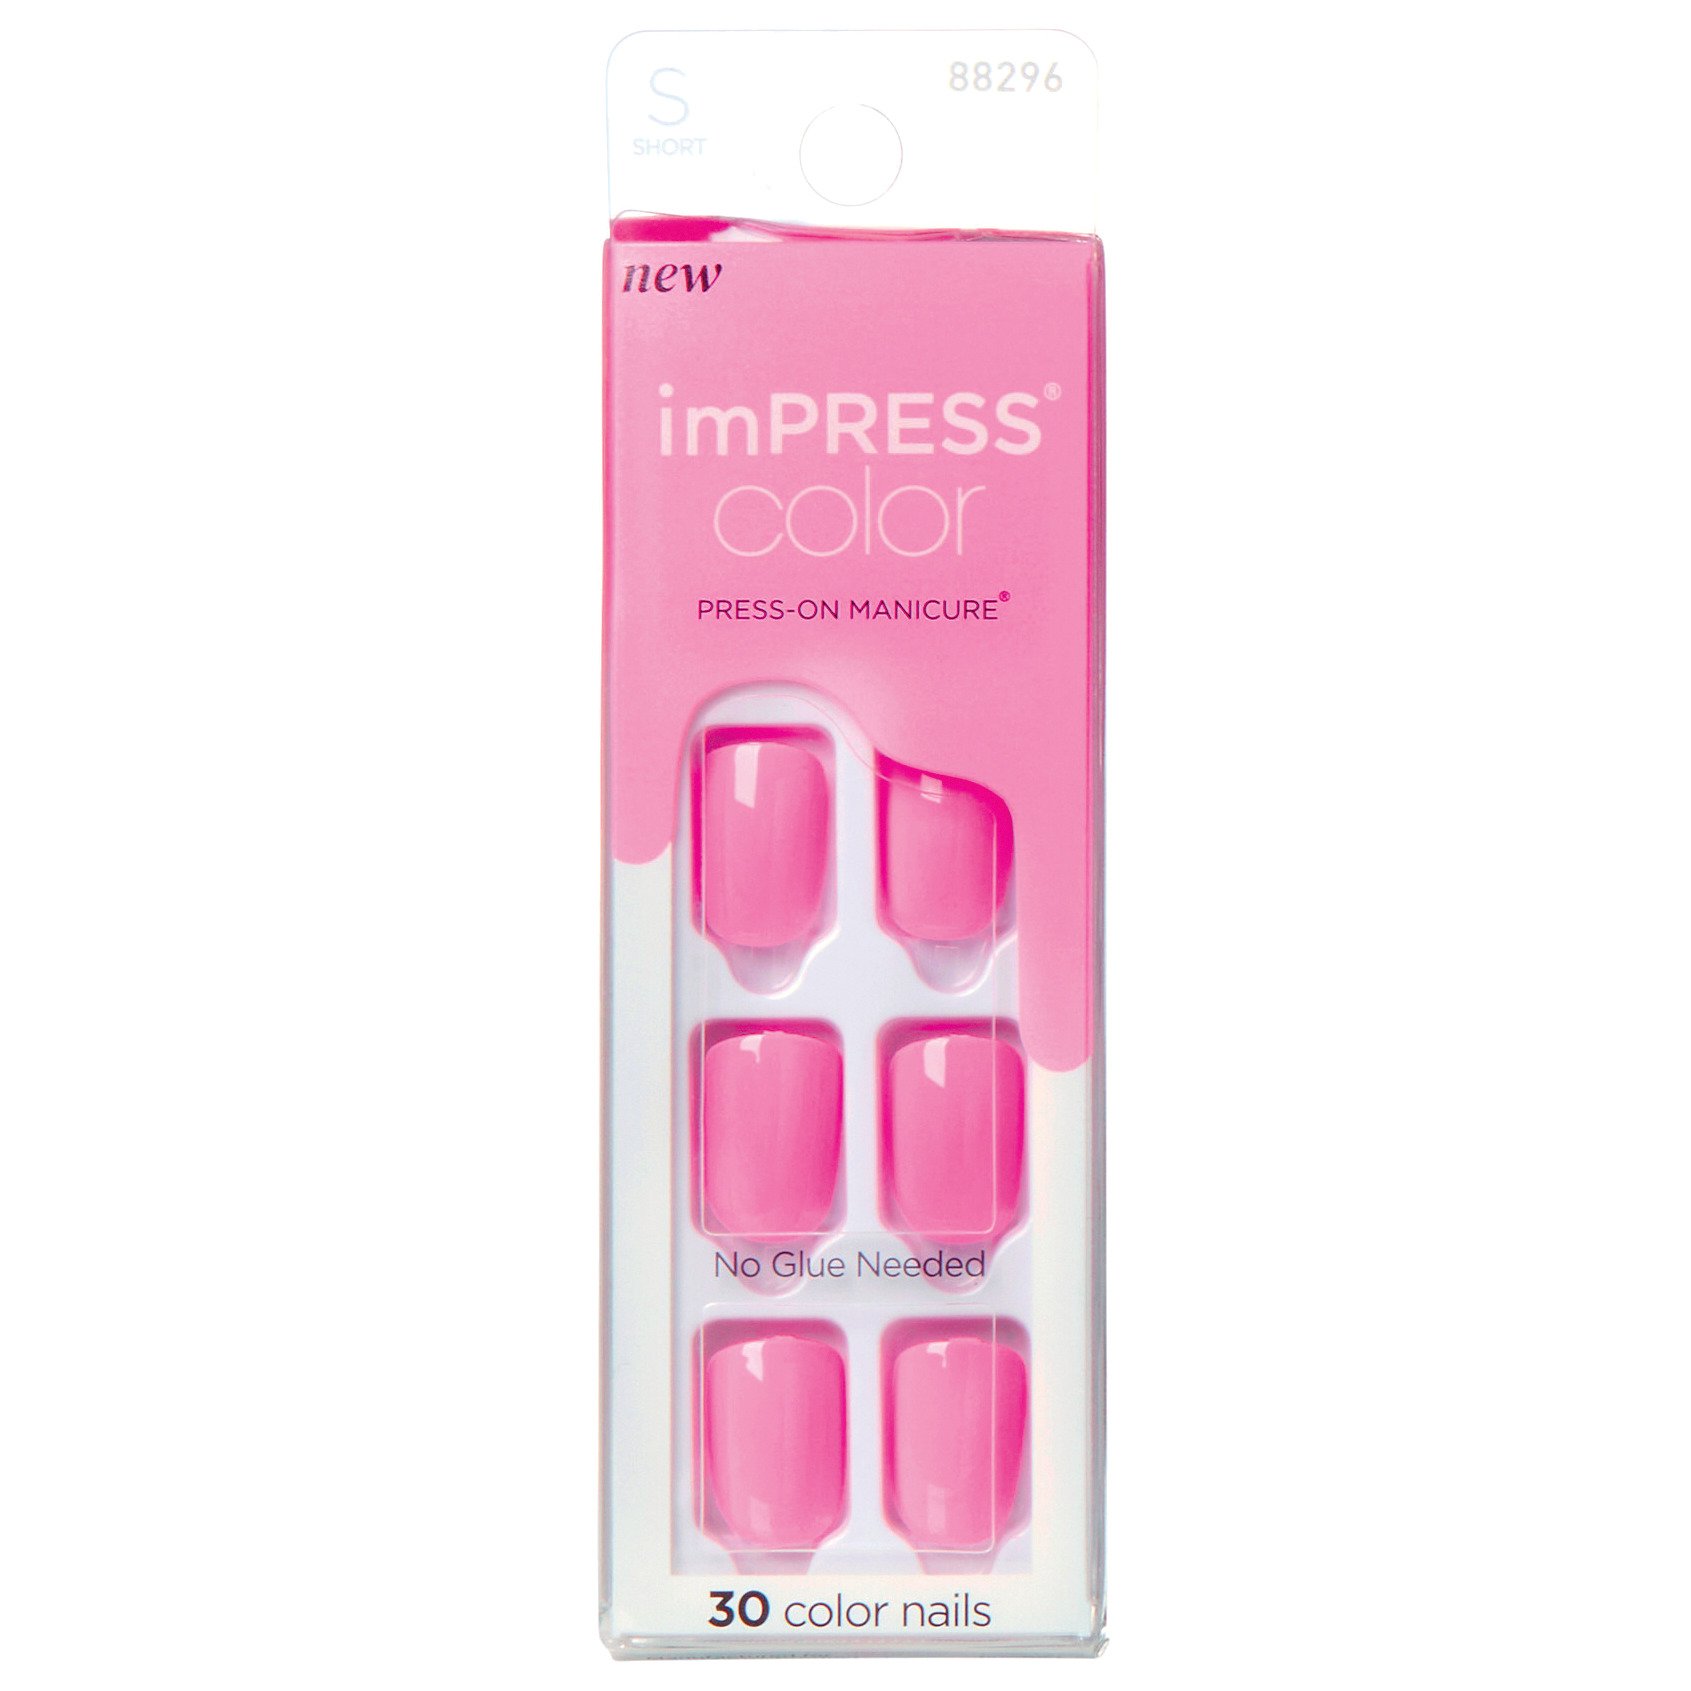 KISS imPRESS Color Press-On Manicure - Self Care - Shop Nail Sets at H-E-B